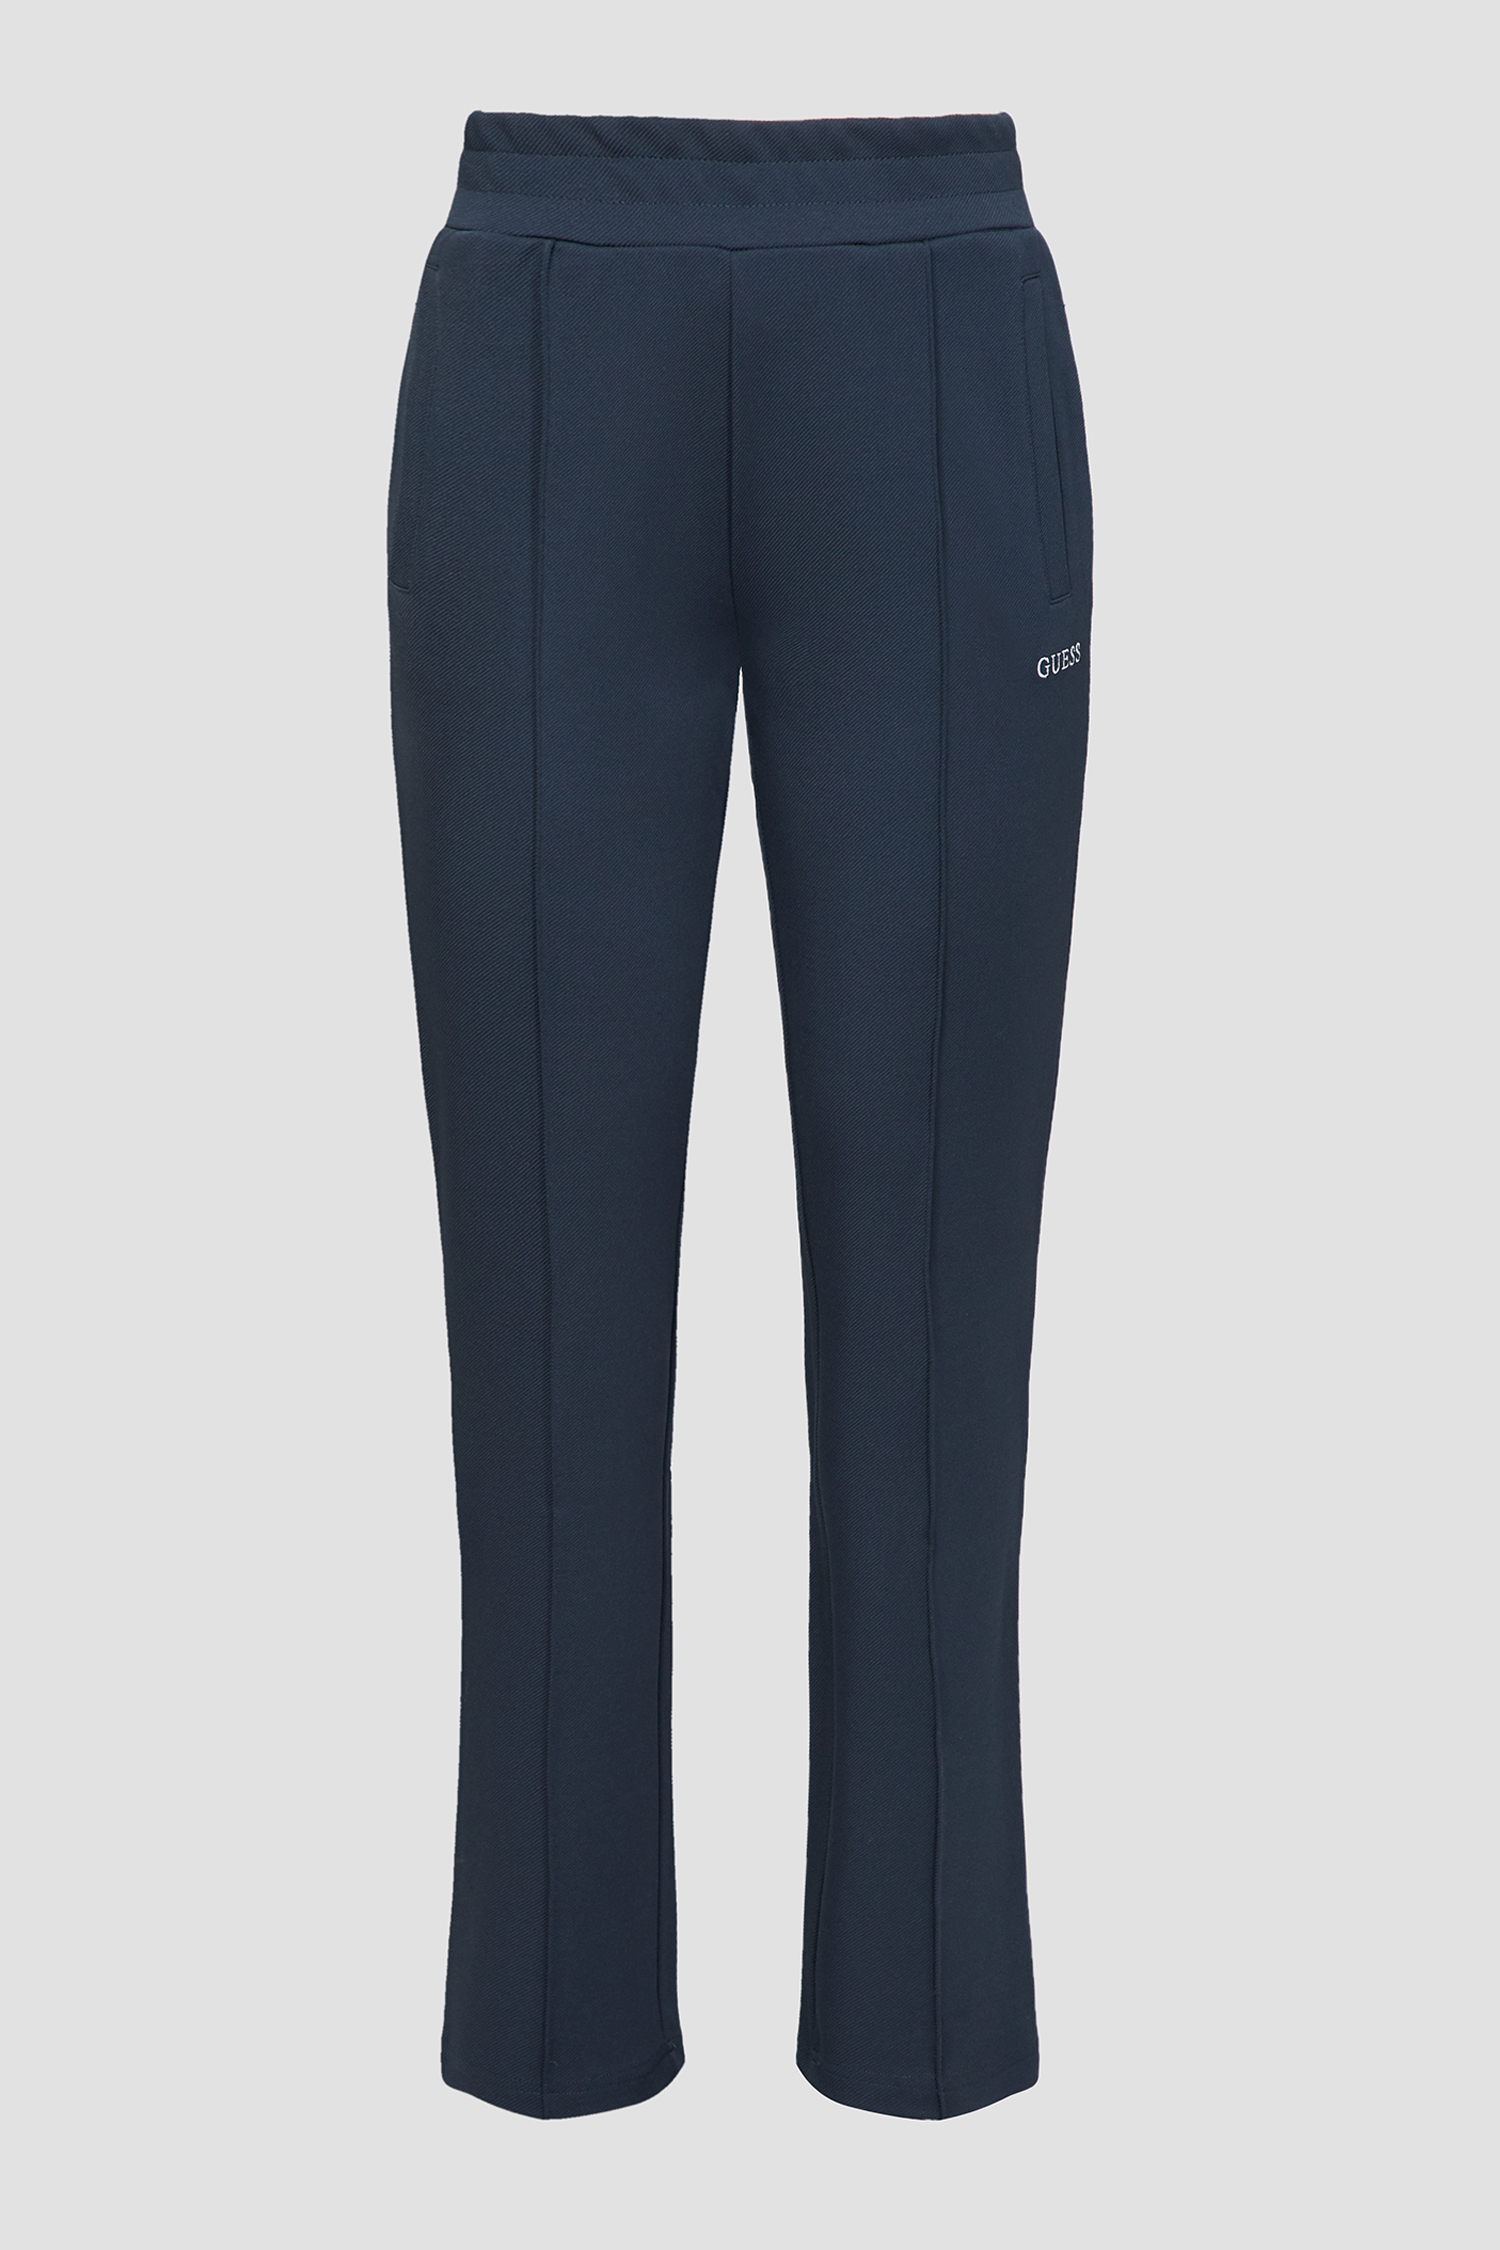 Женские темно-синие спортивные брюки Guess V3GB00.KBO62;G7KI